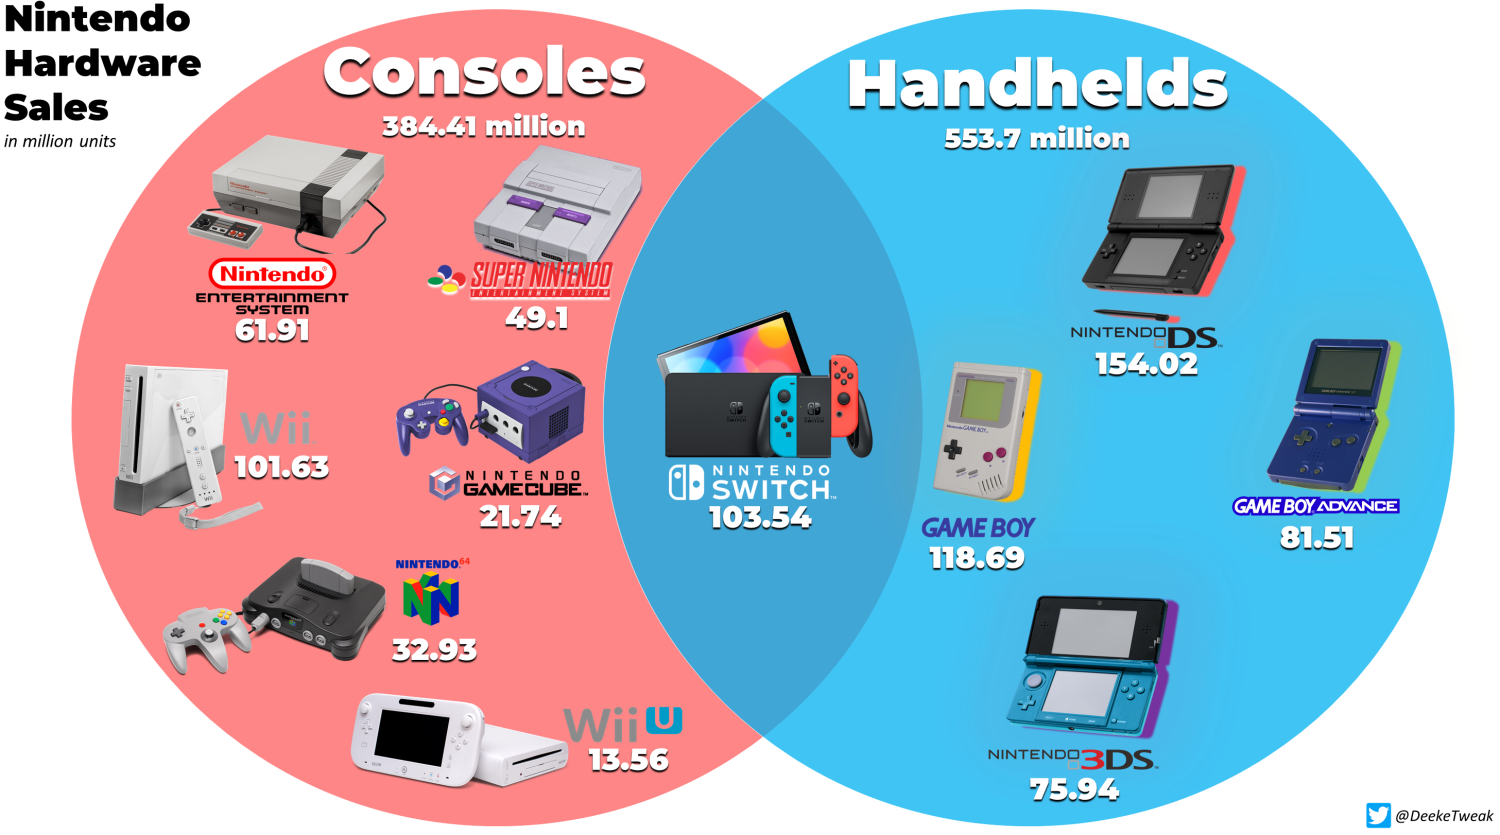 Nintendo has sold over 5.3 billion games in 38